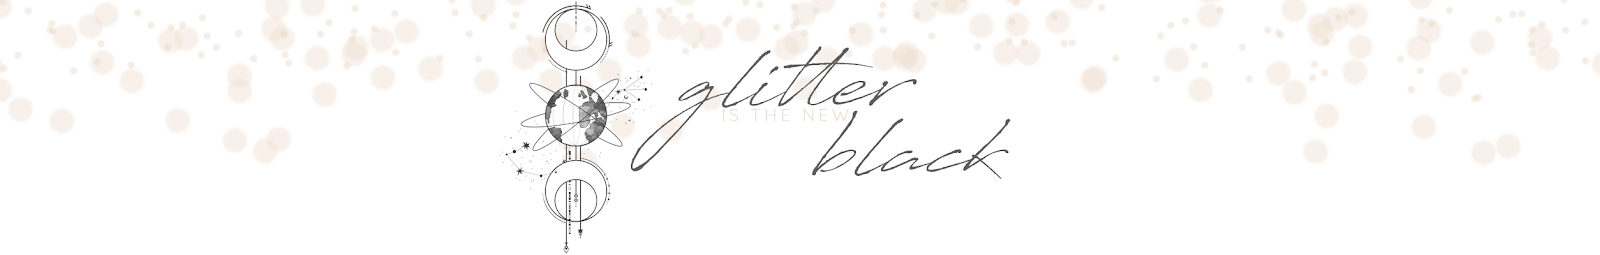 glitter is the new black